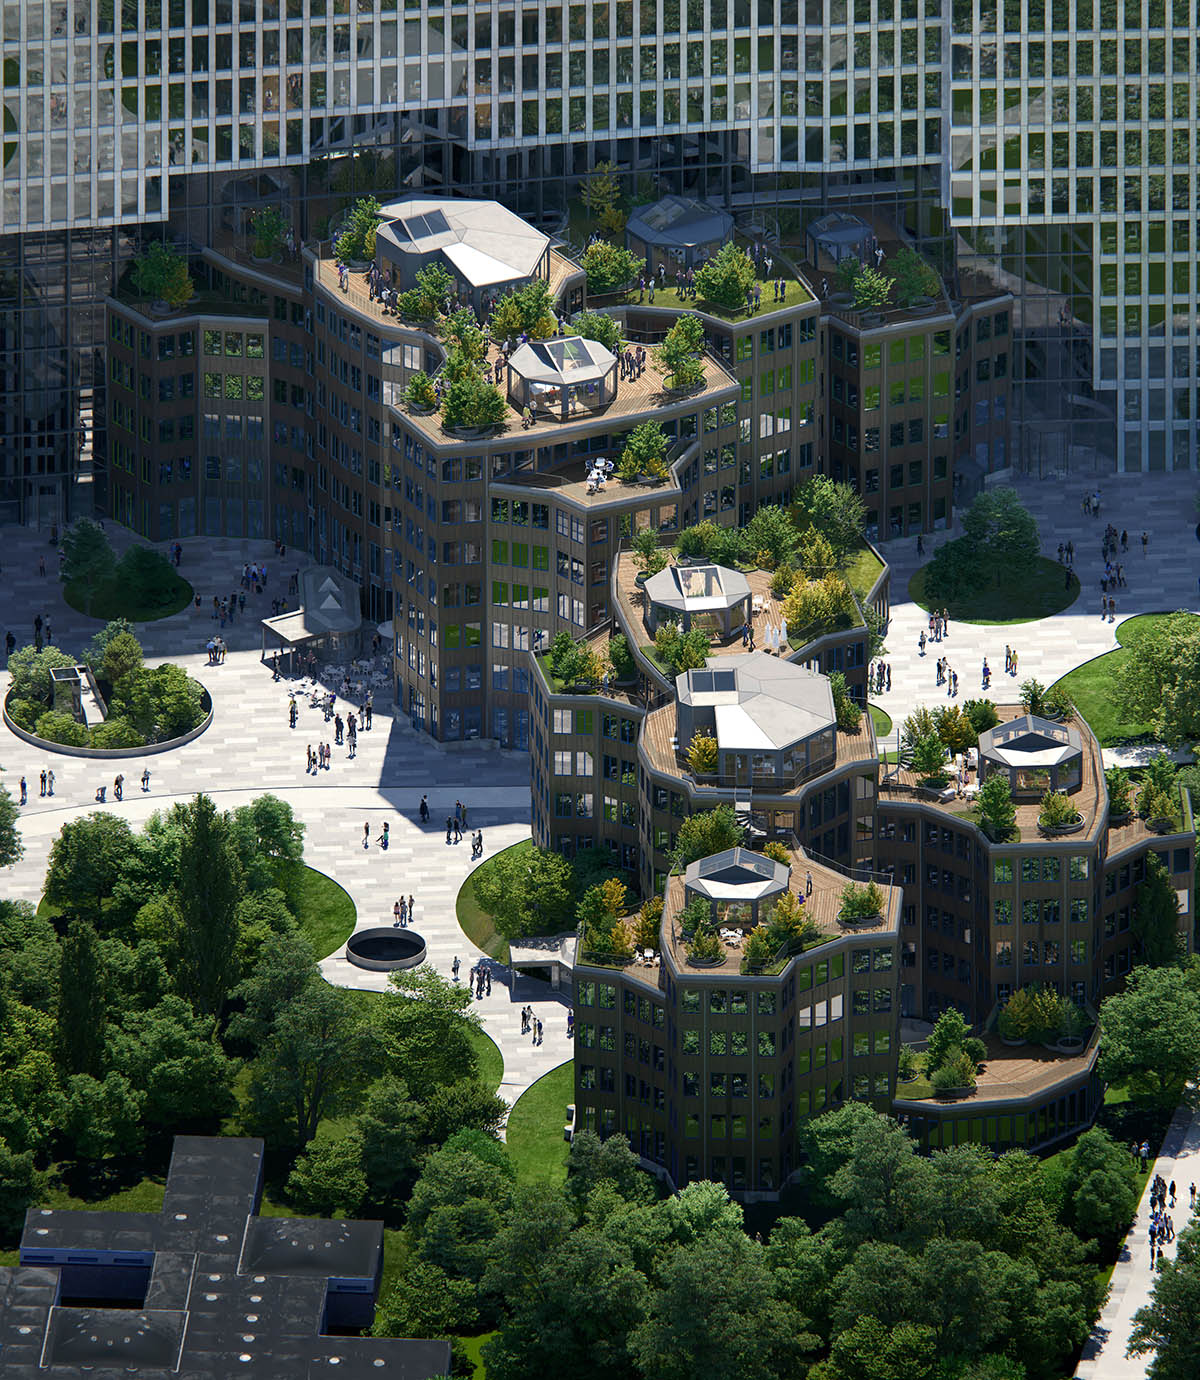 renovates Aldo van Eyck's office complex with sound-walled "groundscraper" in Amsterdam